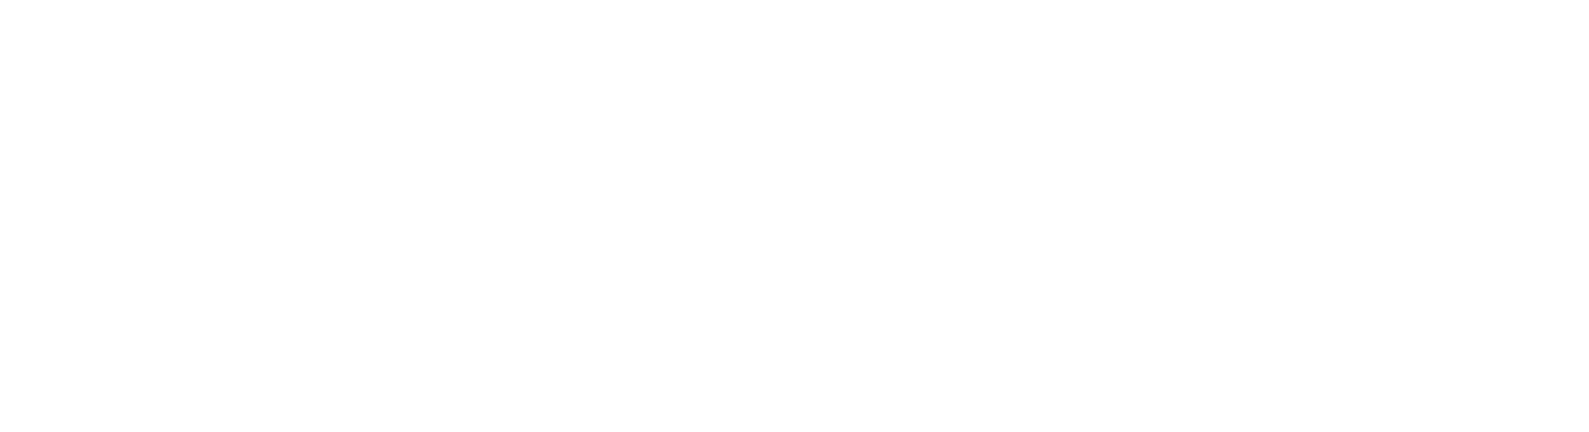 Public Good Projects logo